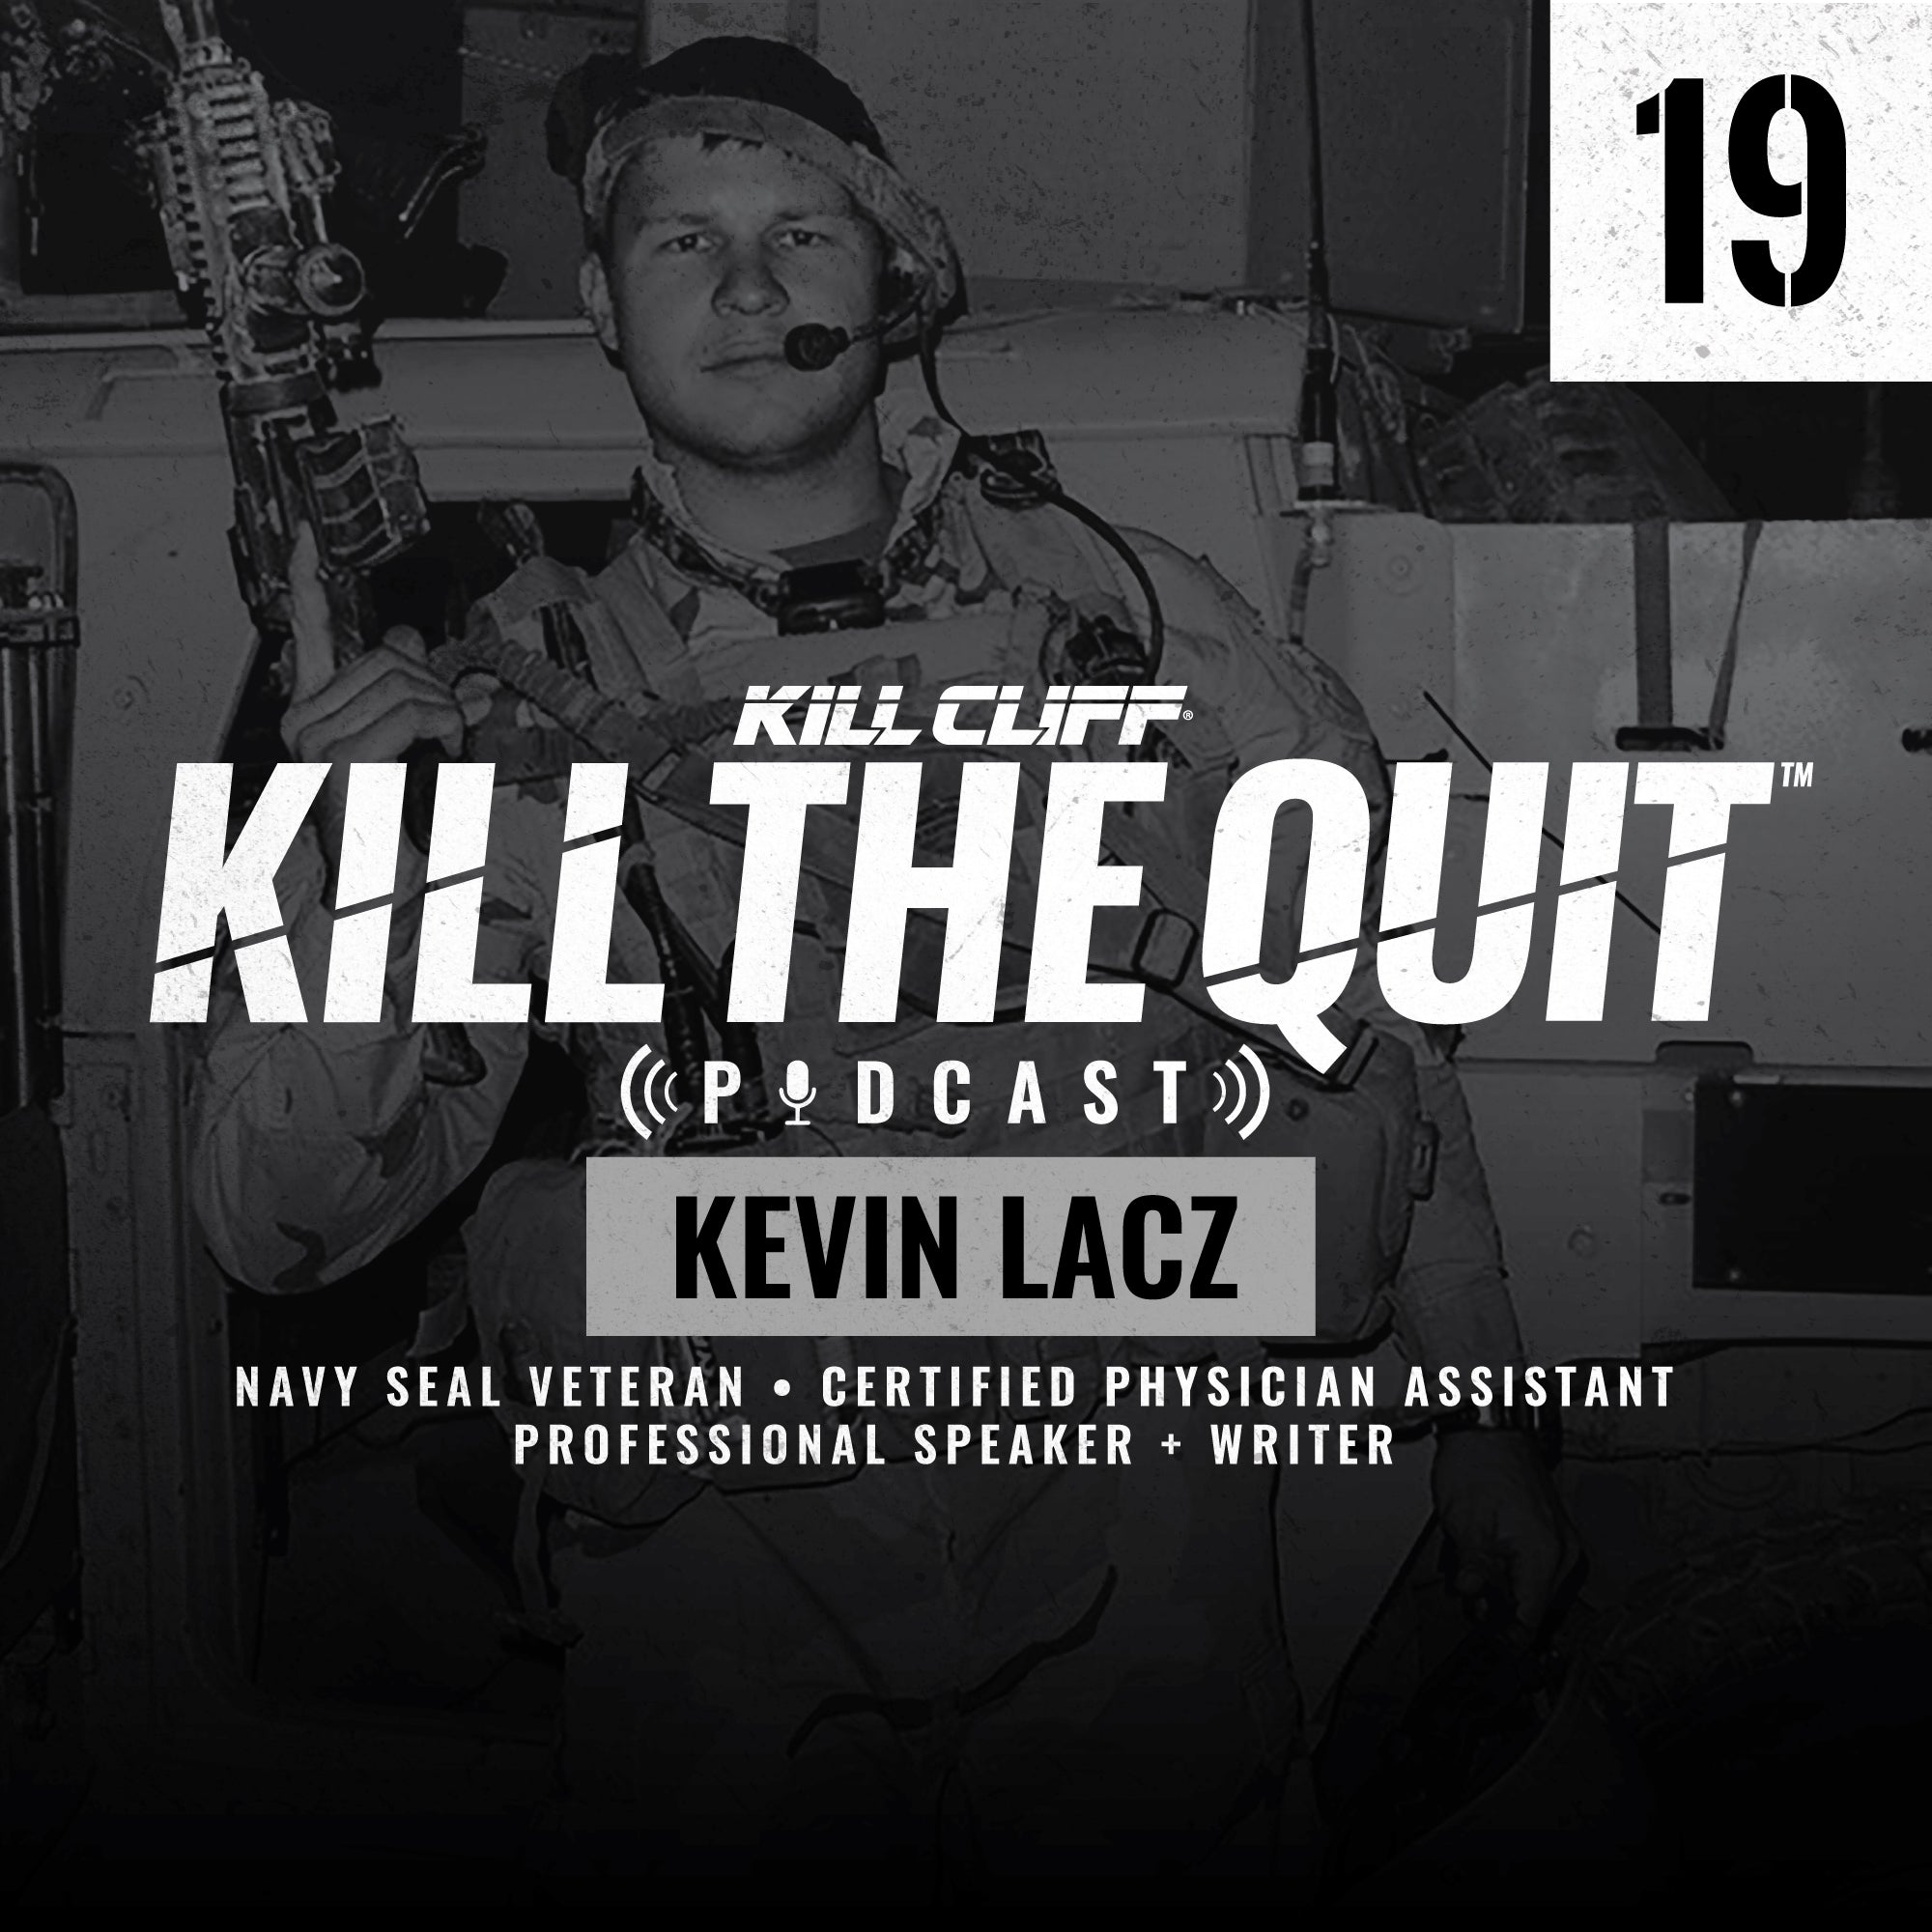 PODCAST Ep. 019 - Kevin Lacz - Kill Cliff